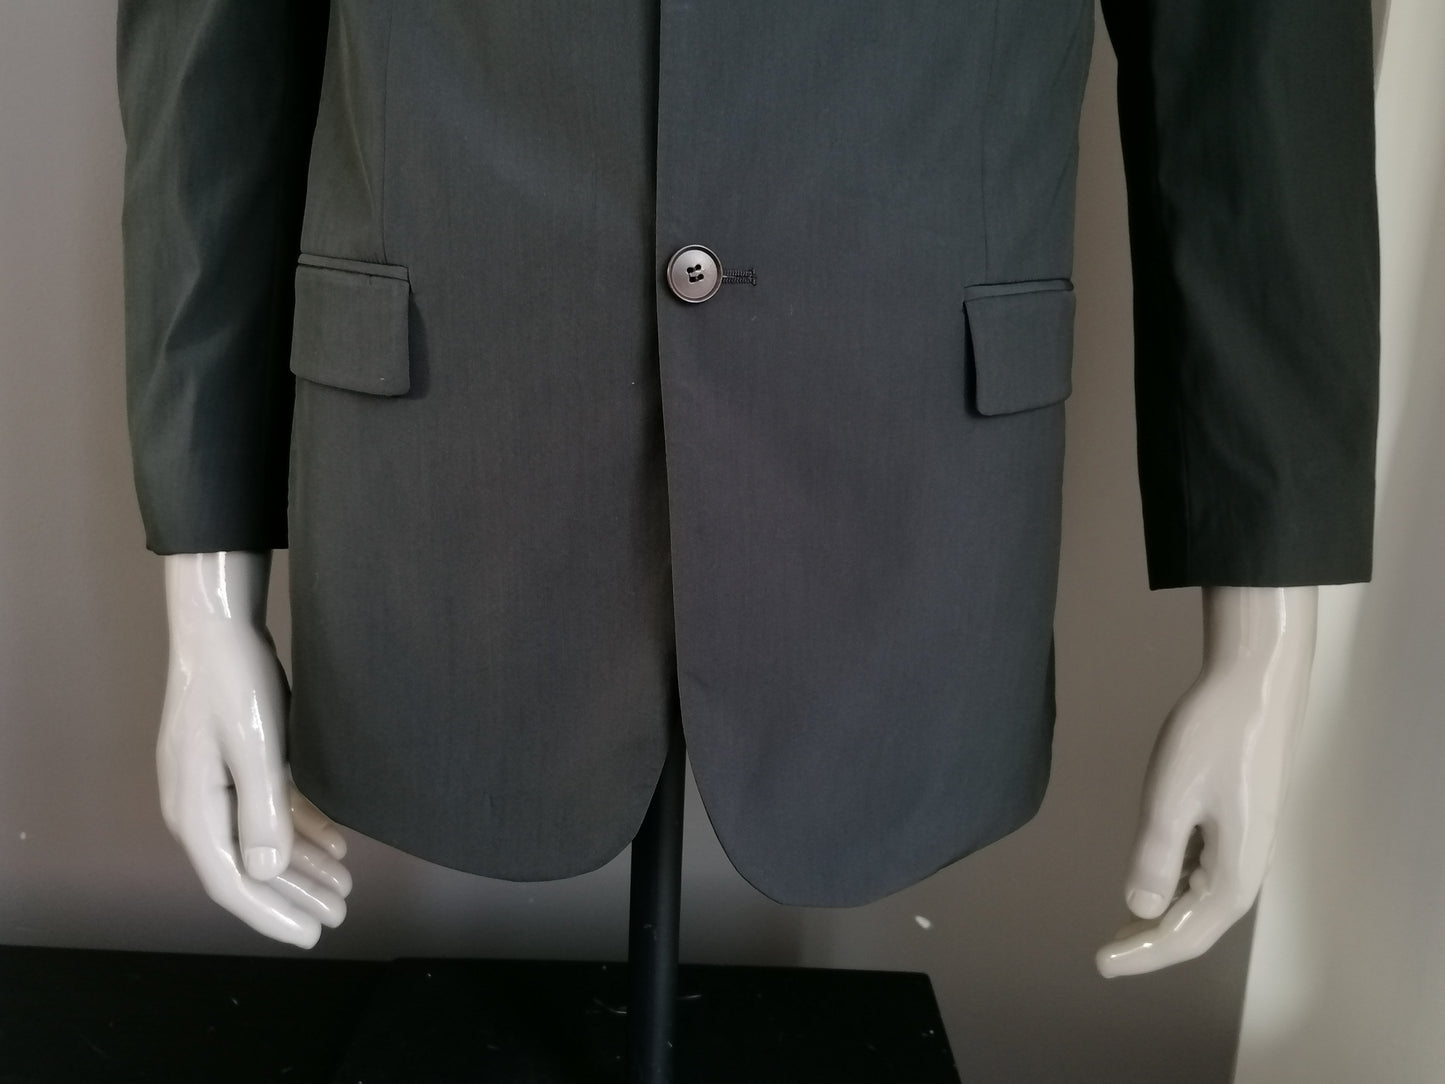 Vintage Hugo Boss jacket. Dark green colored, light glossy. Size 50 / M. Stretch